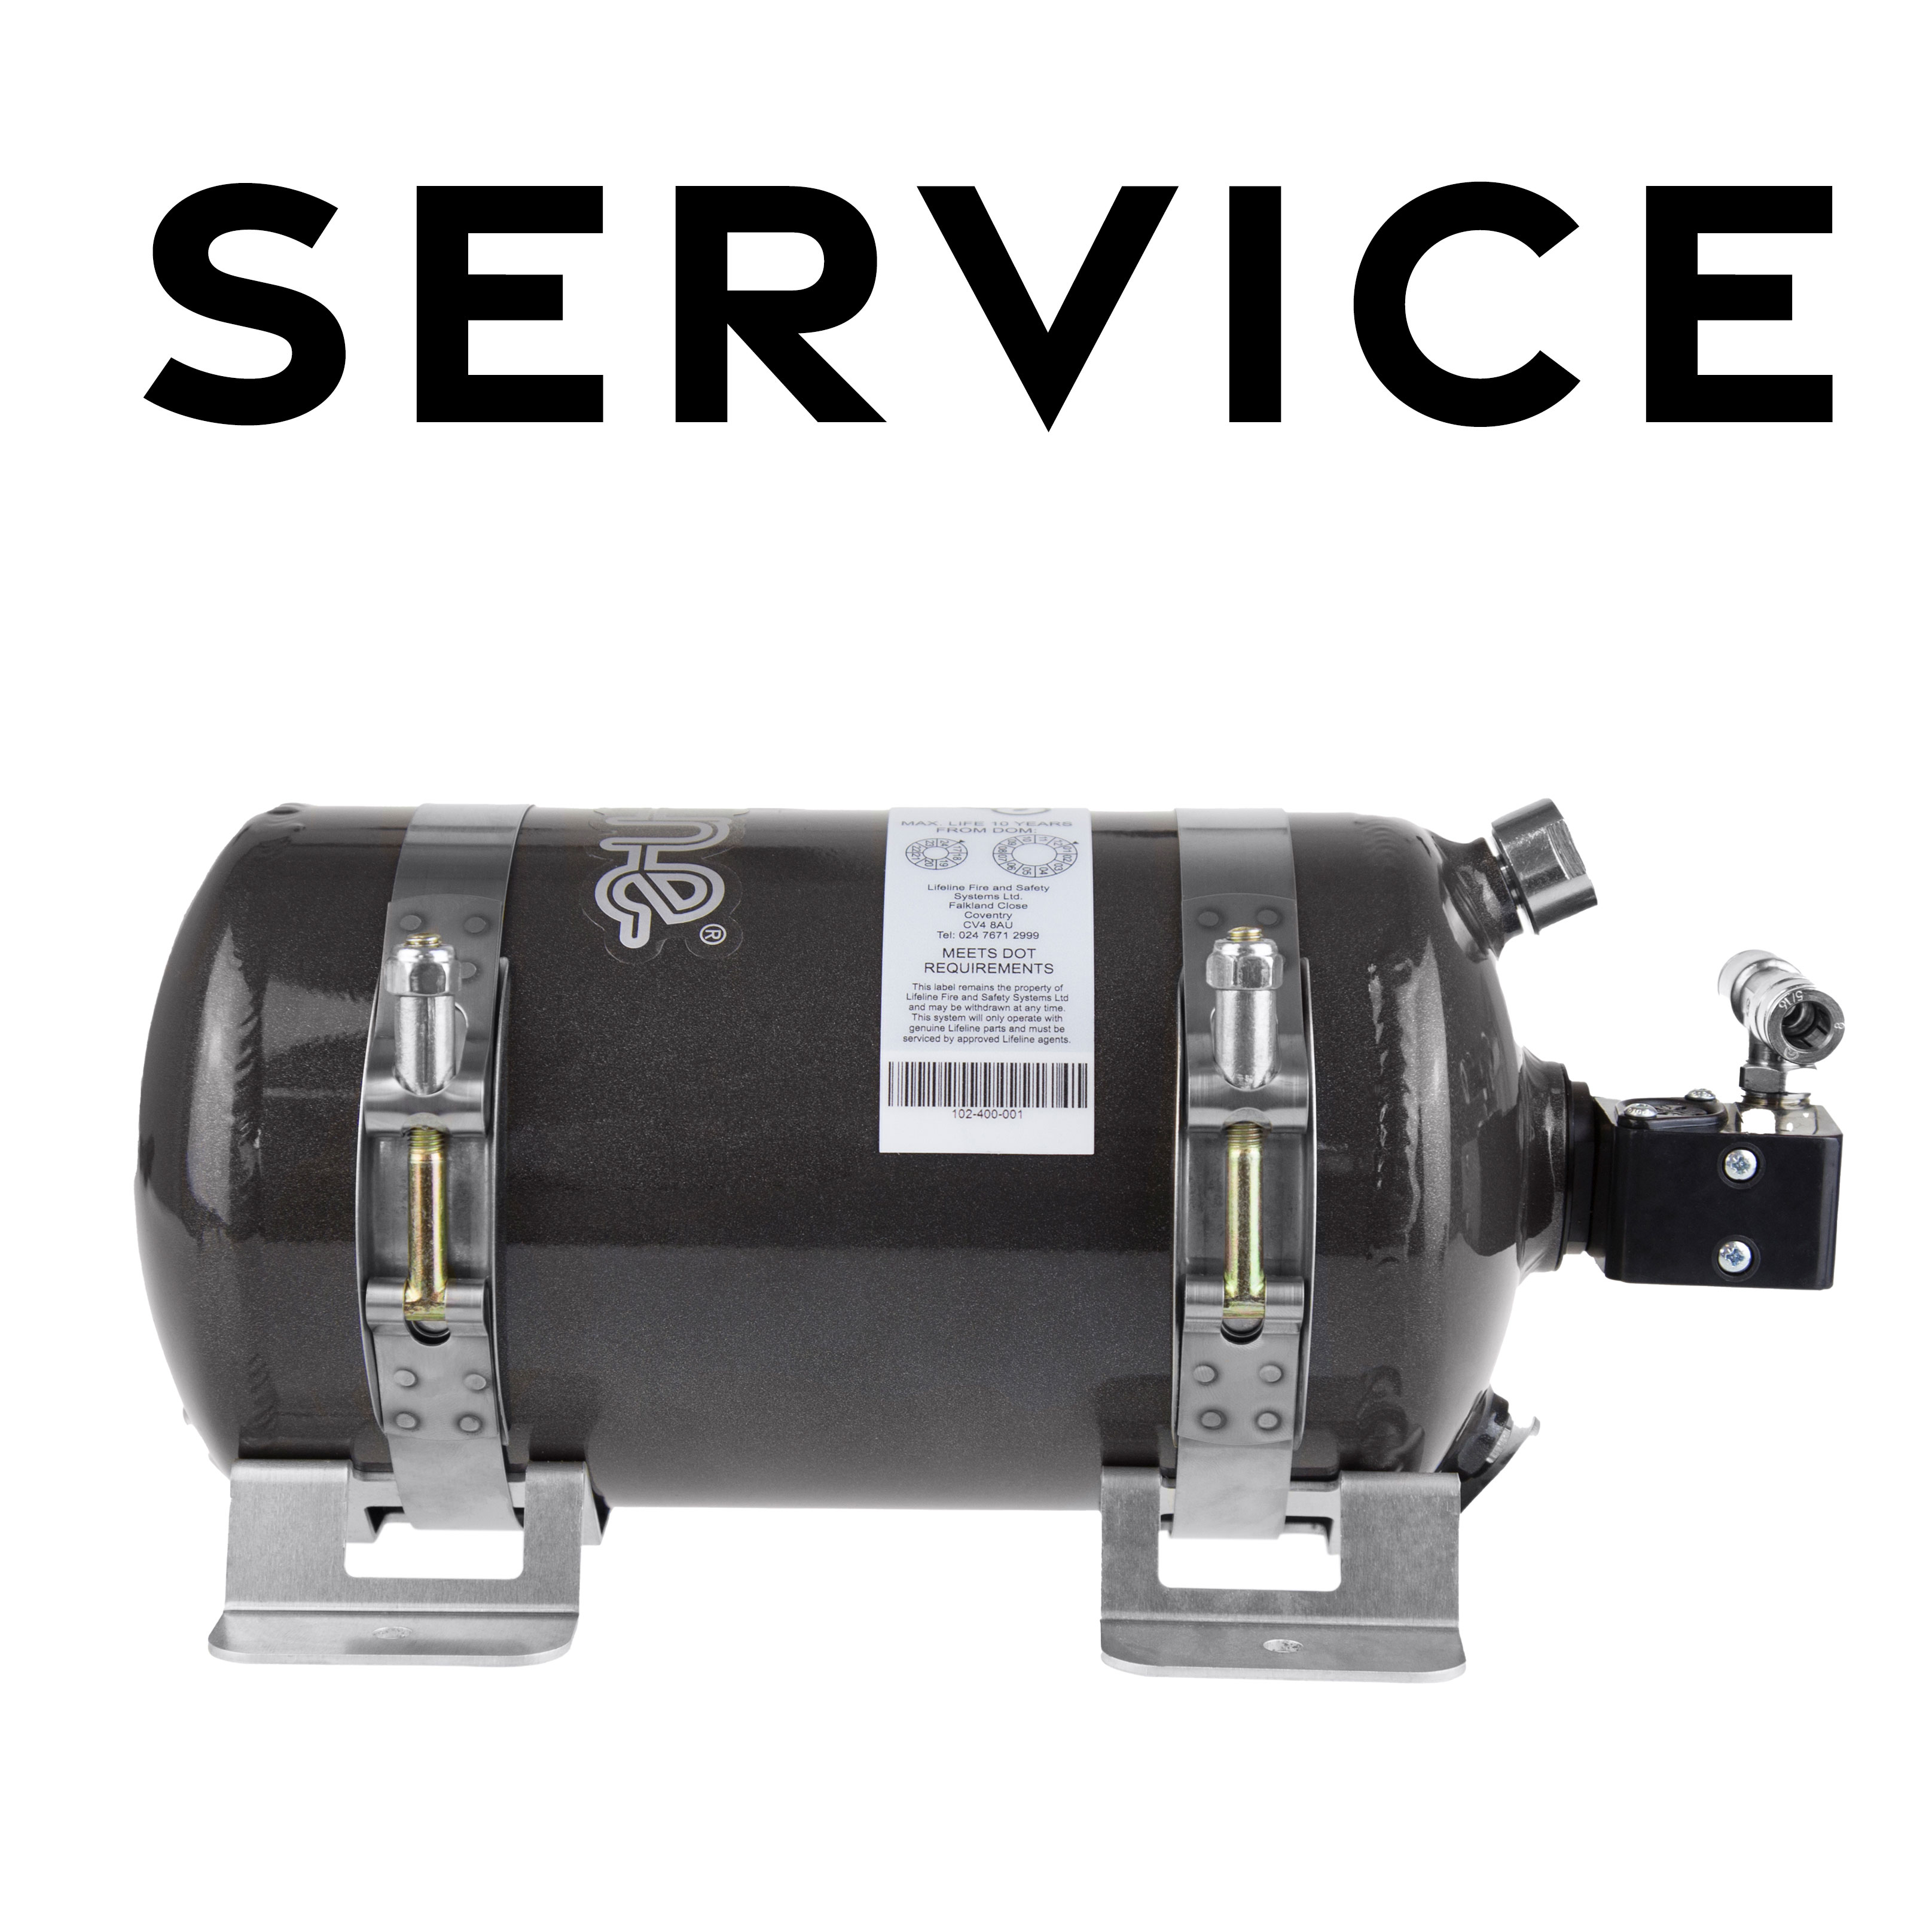 Service - Refill - Lifeline Zero 360 FIA Novec 1230 3.0KG Elelctrical Fire Extinguisher 